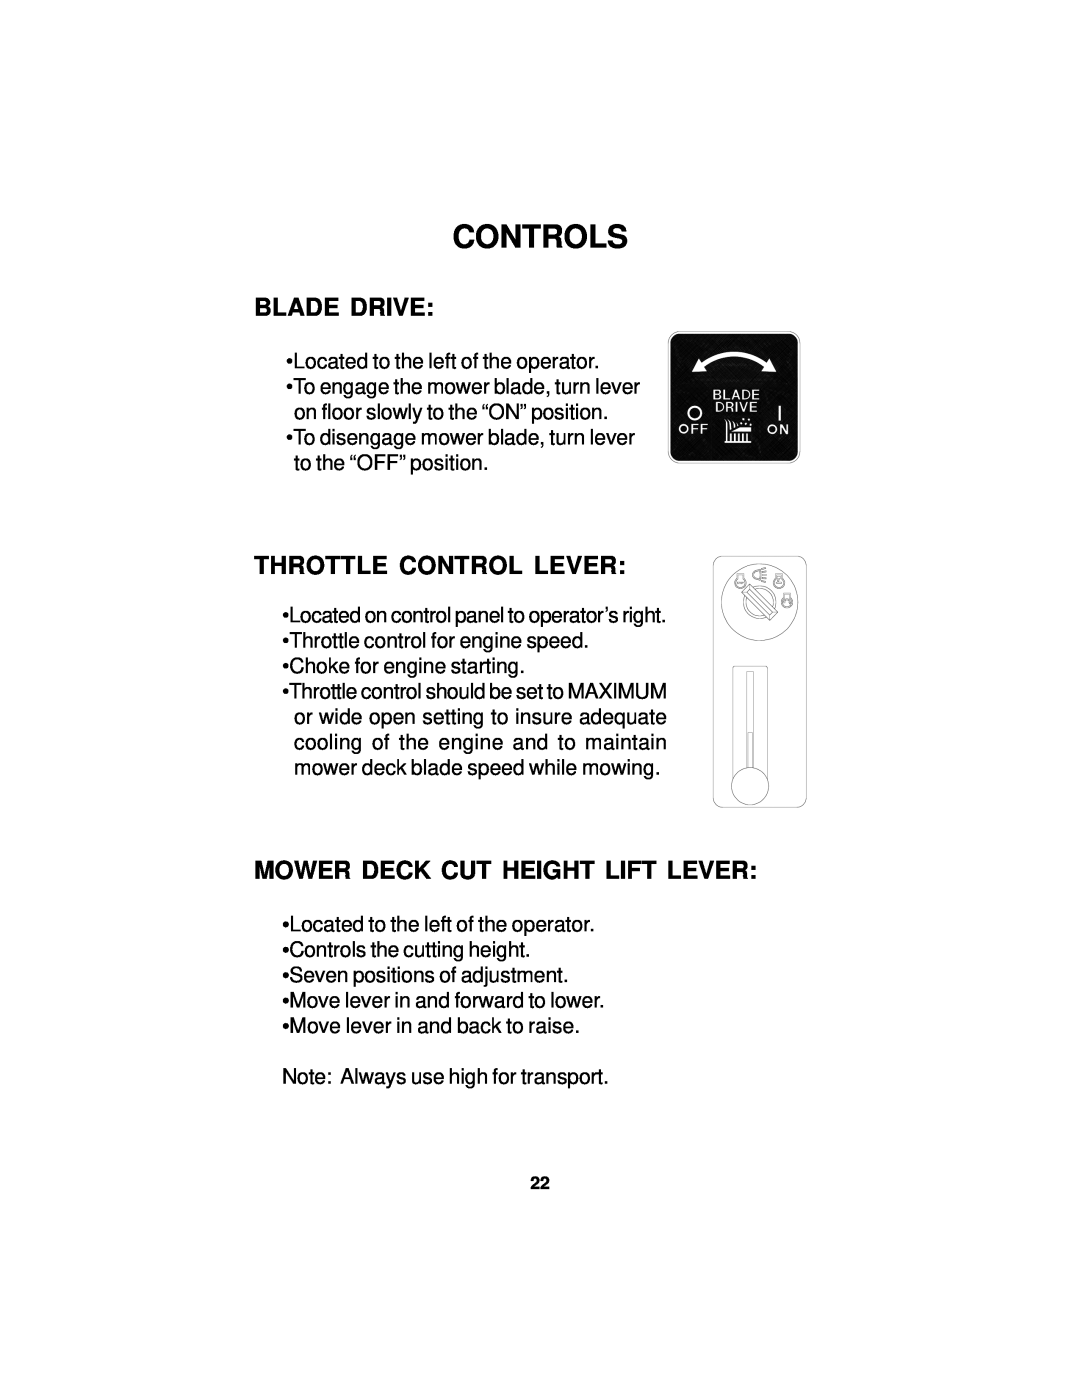 Dixon 14295-0804 manual Blade Drive, Throttle Control Lever, Mower Deck Cut Height Lift Lever, Controls 